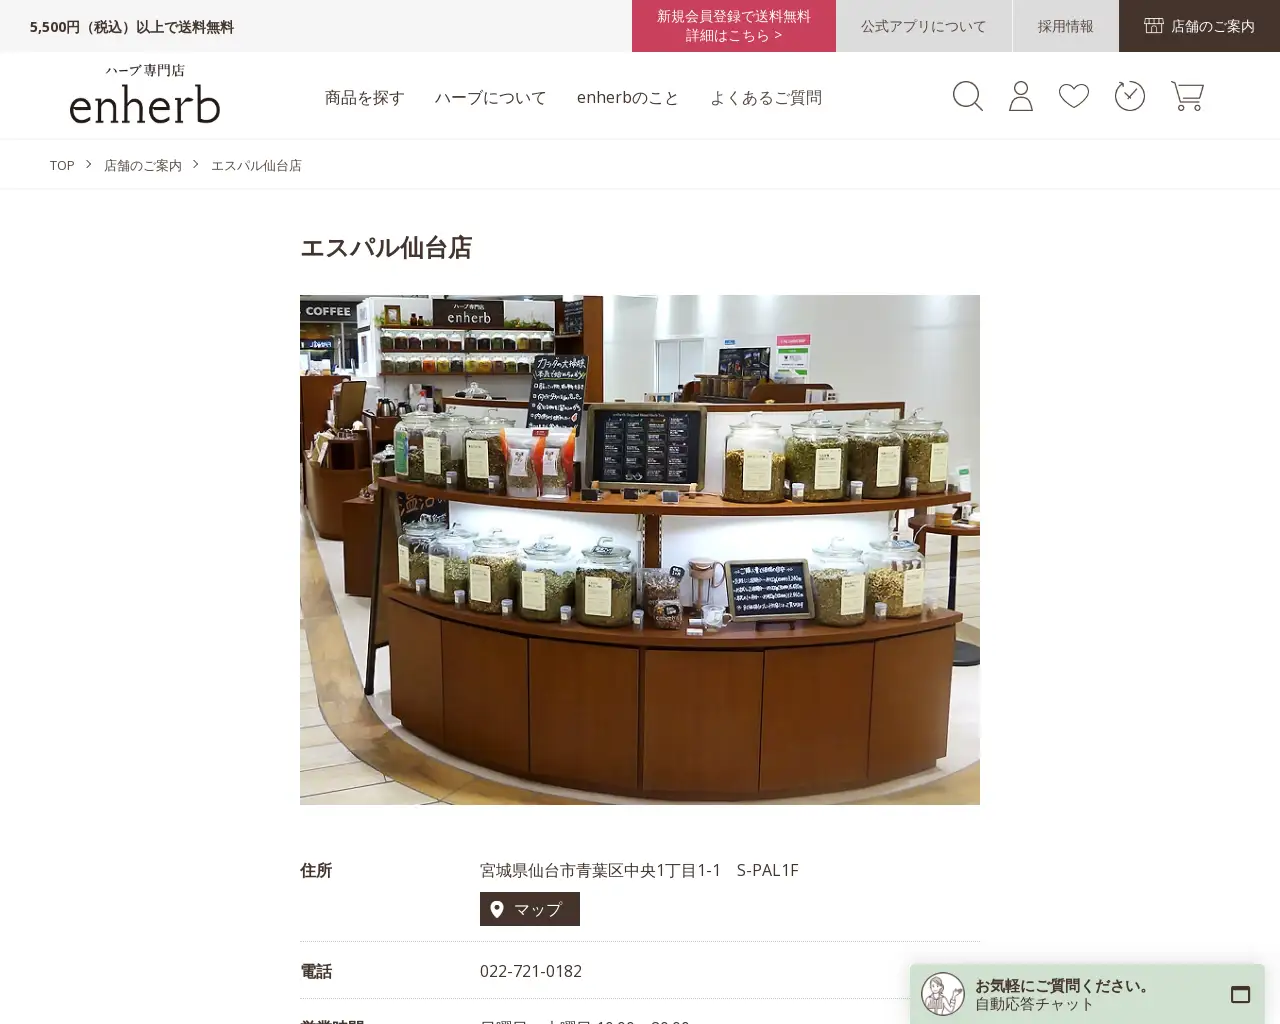 enherb エスパル仙台店 site